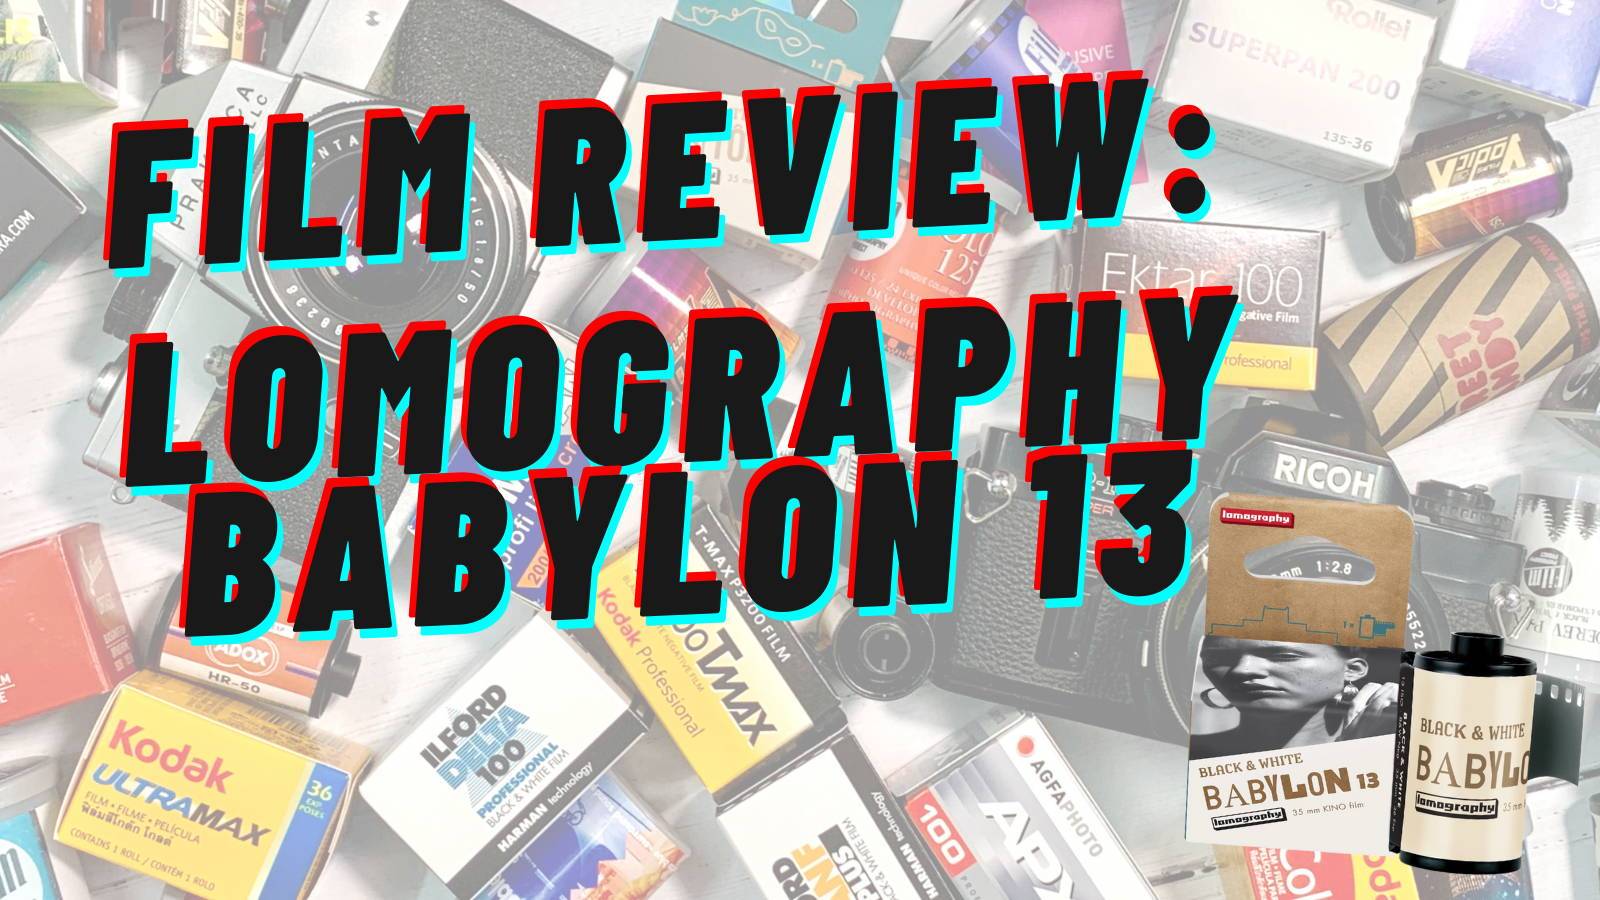 Lomography Babylon 13 Film Review - Analogue Wonderland